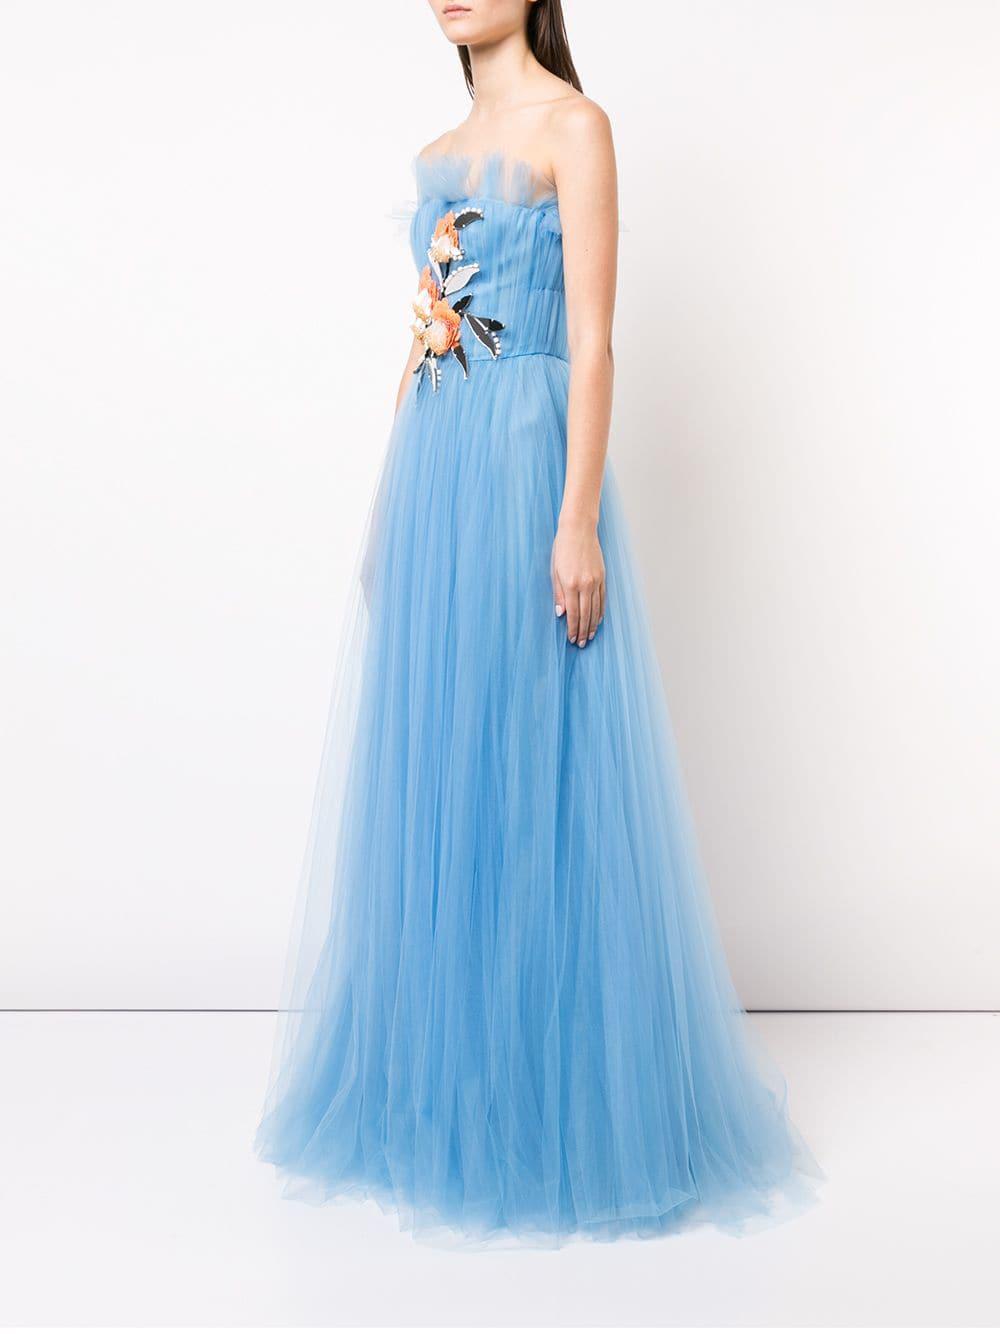 Carolina Herrera Floral Appliqué Tulle Dress in Blue - Lyst